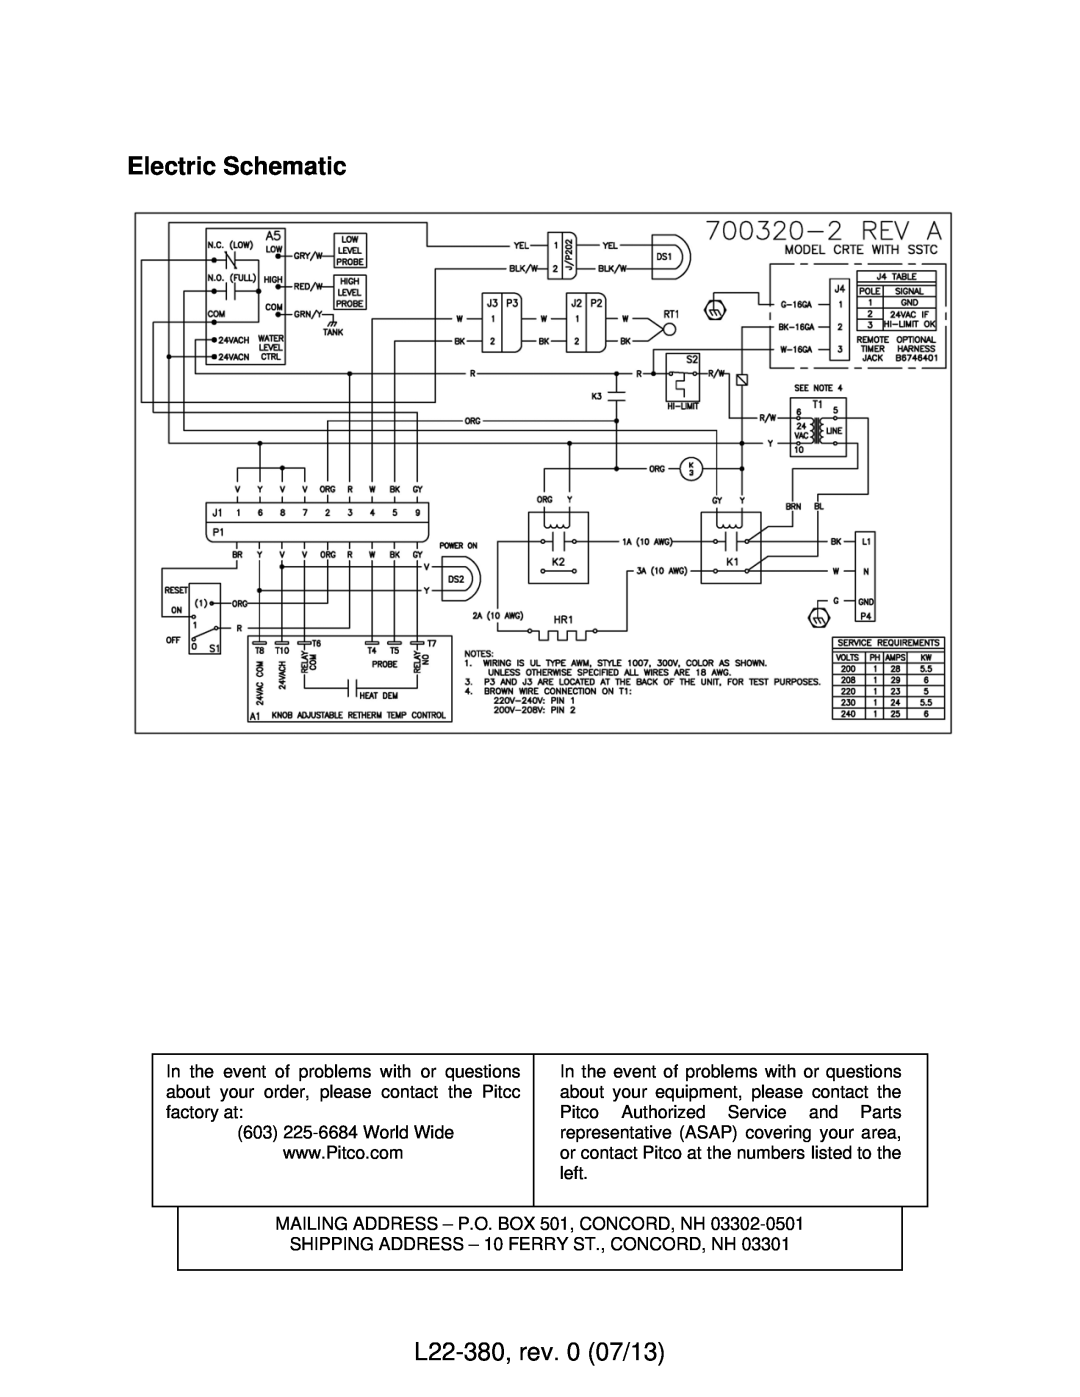 Pitco Frialator manual Electric Schematic, L22-380, rev. 0 07/13 